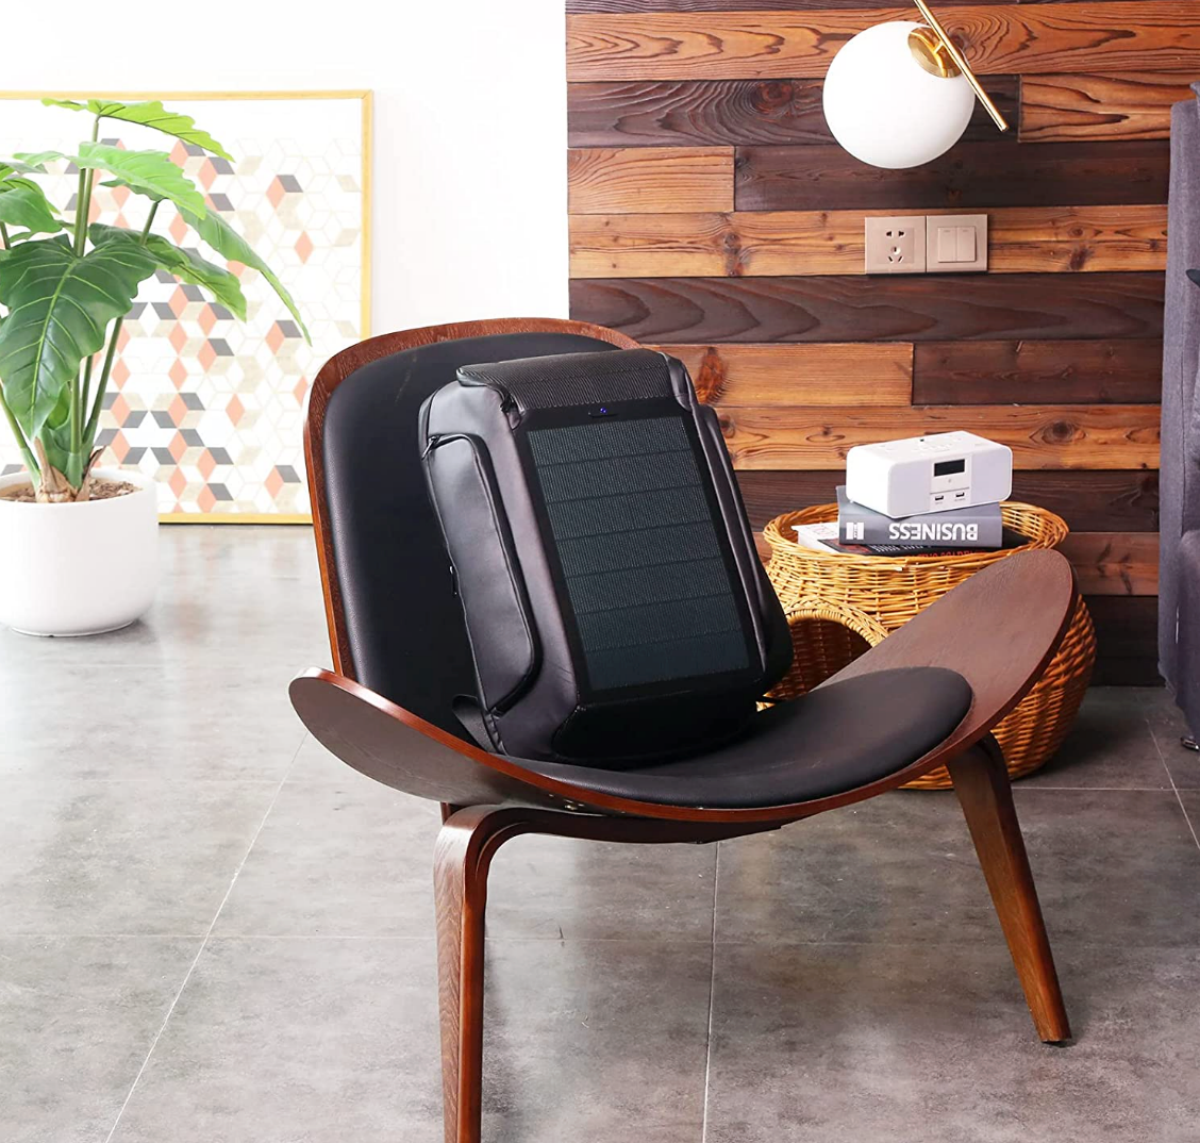 A Kingsons Beam Solar Backpack on a chair